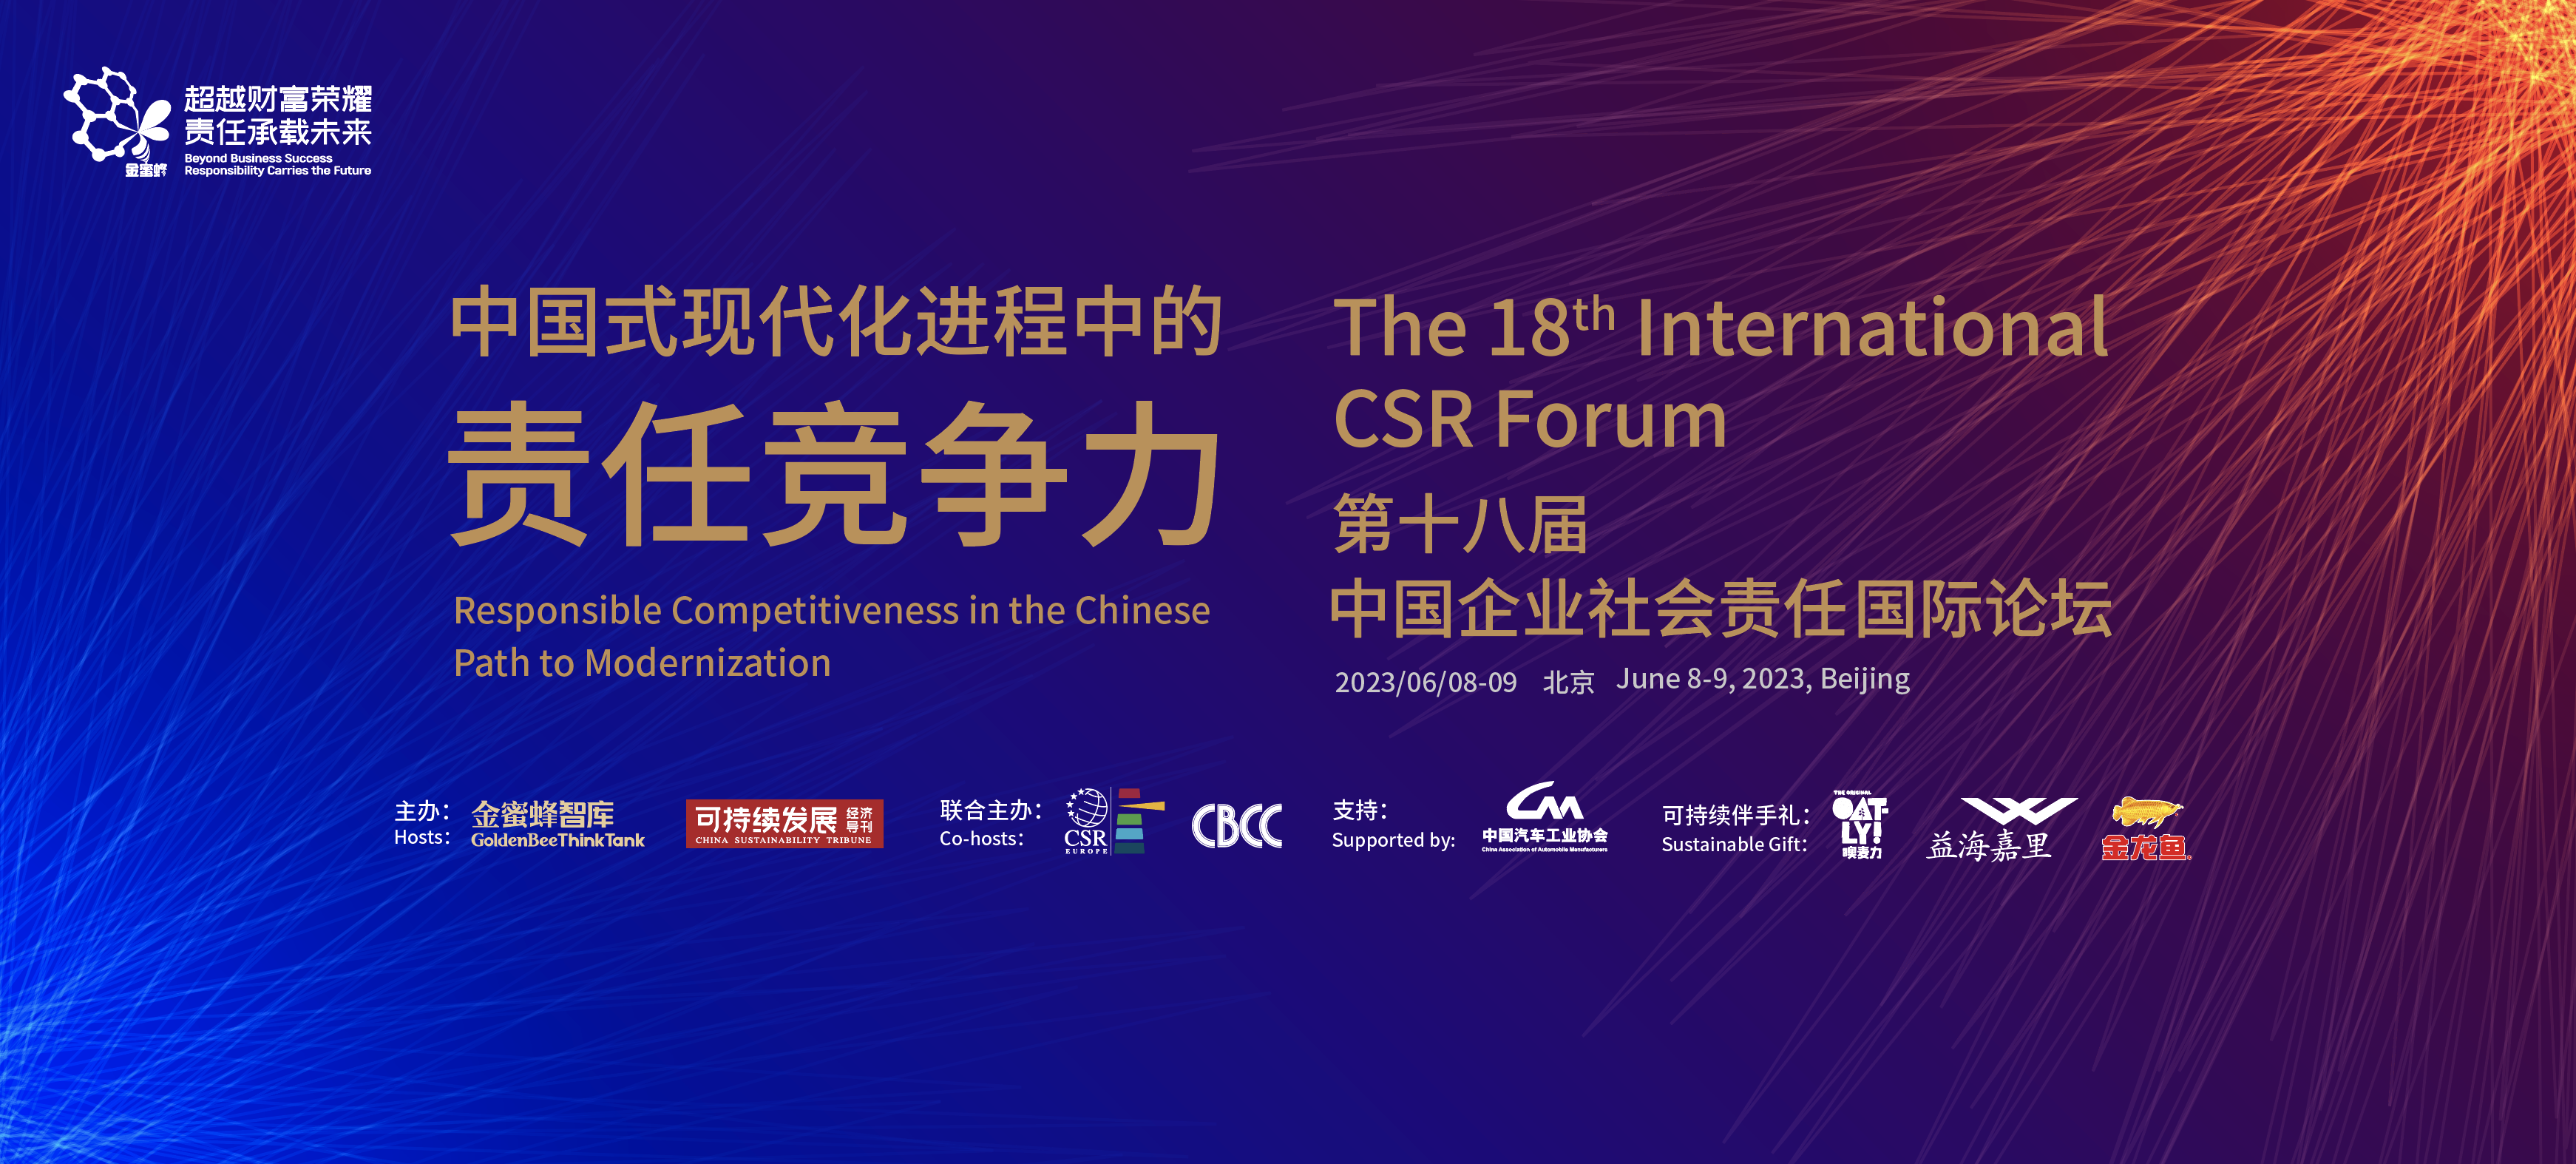 The 18th International CSR Forum successfully held